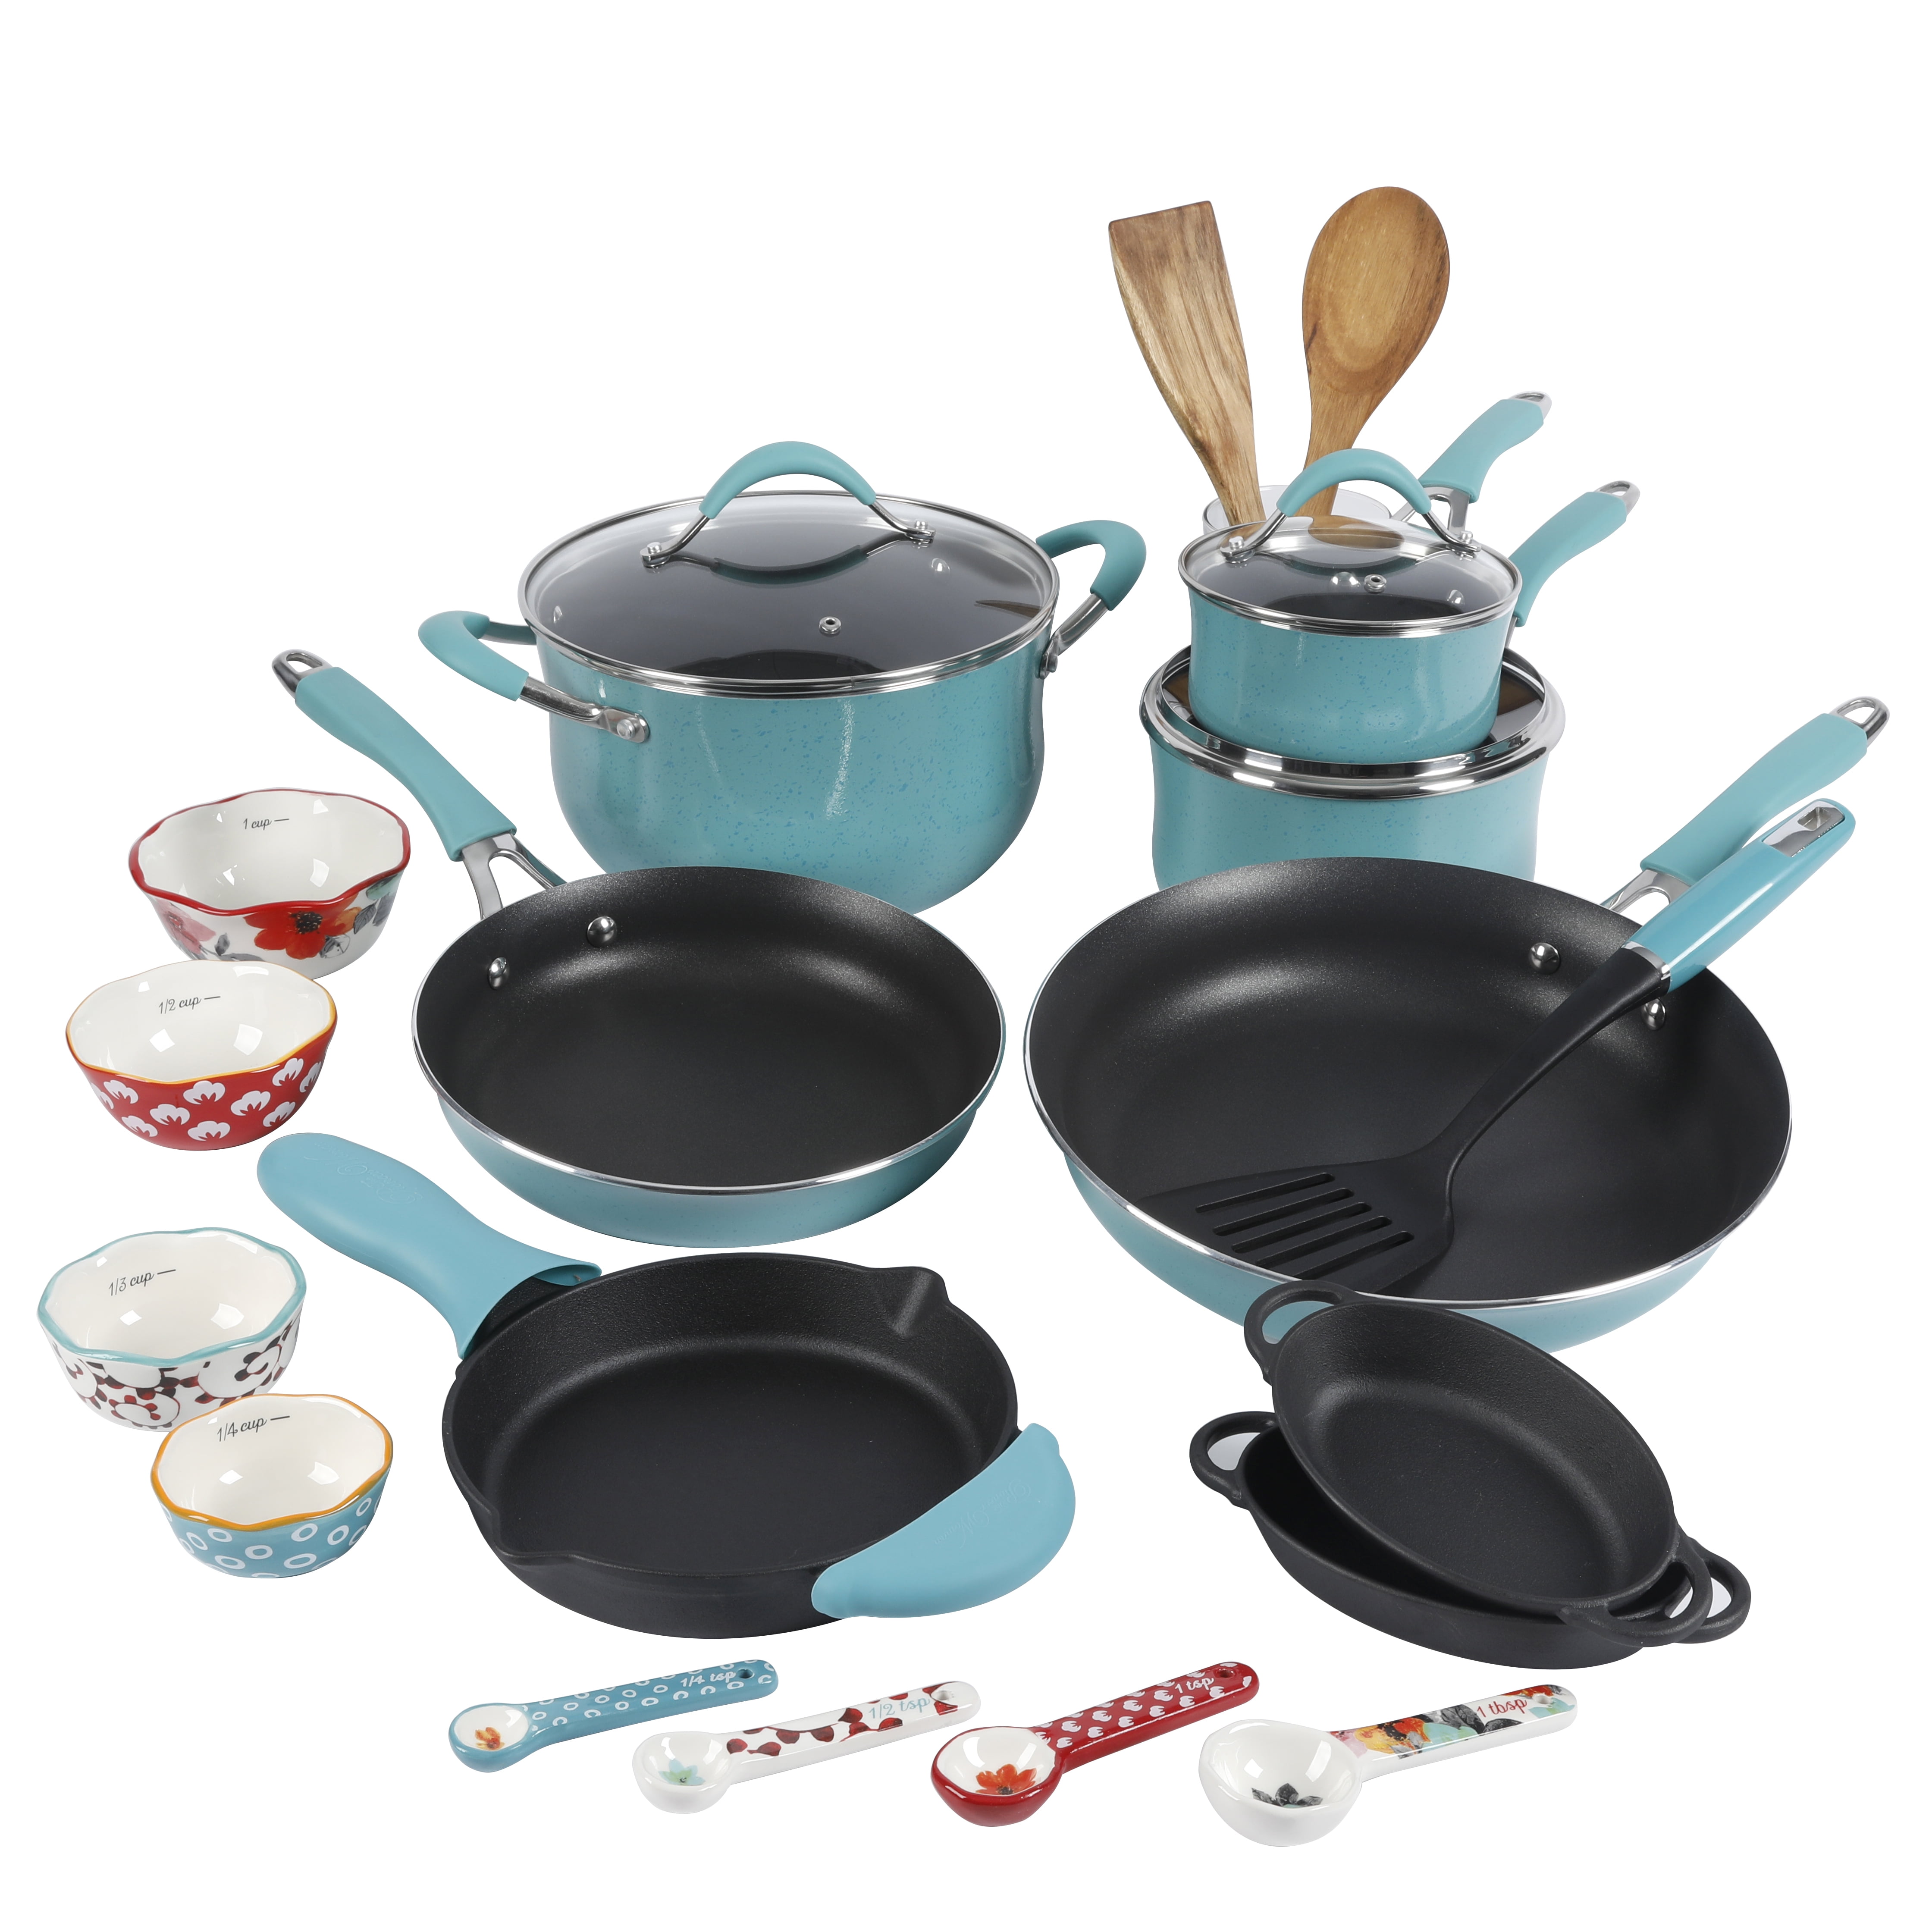 Details about   The Pioneer Woman 5-Piece Cookware Set Frontier Nonstick Pots Pans Turquoise 